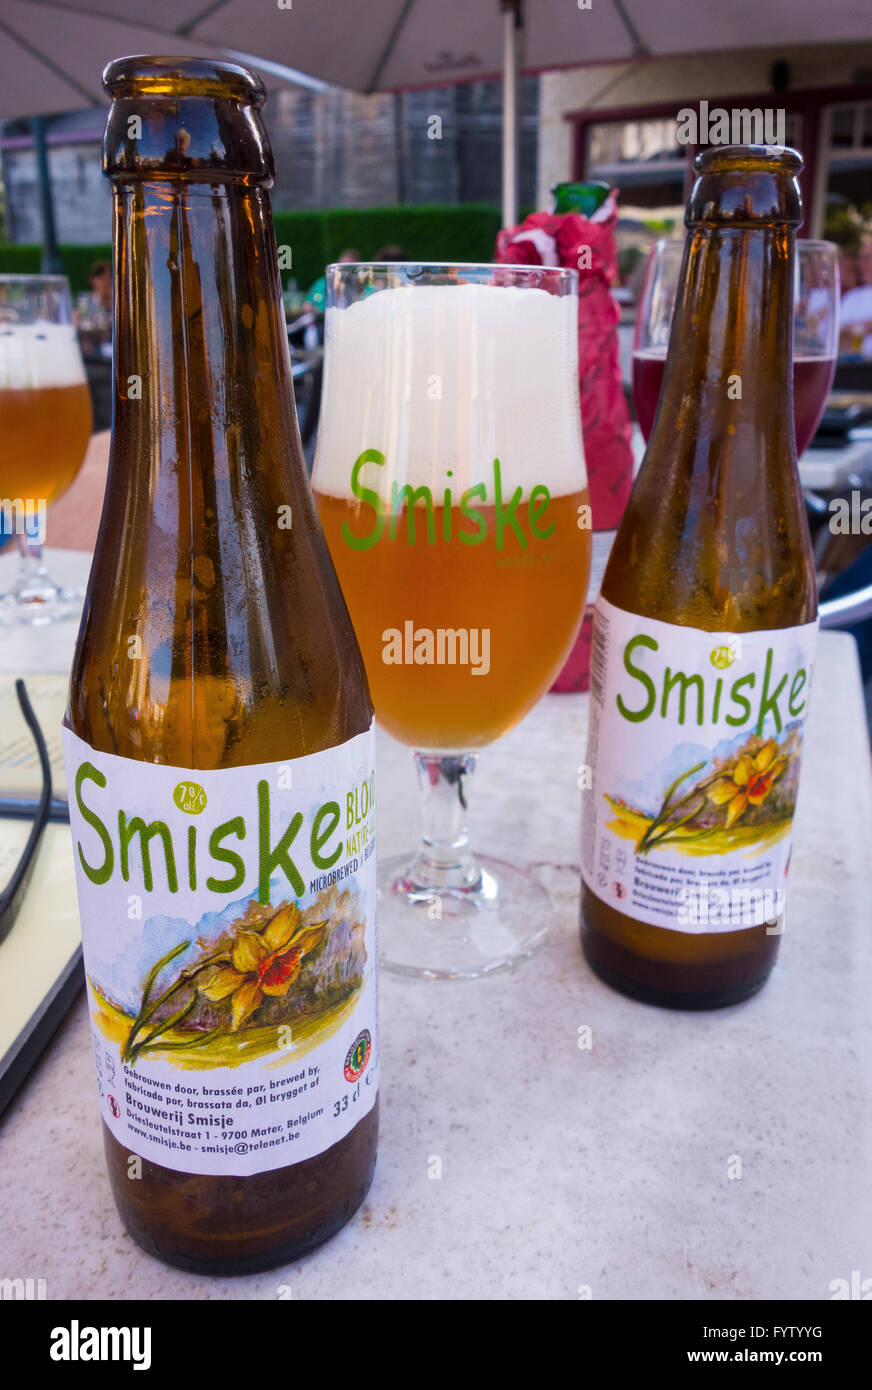 OUDENAARDE, Belgio - Vetro e bottiglie di Smiske birra bionda, un belga microbrew. Foto Stock